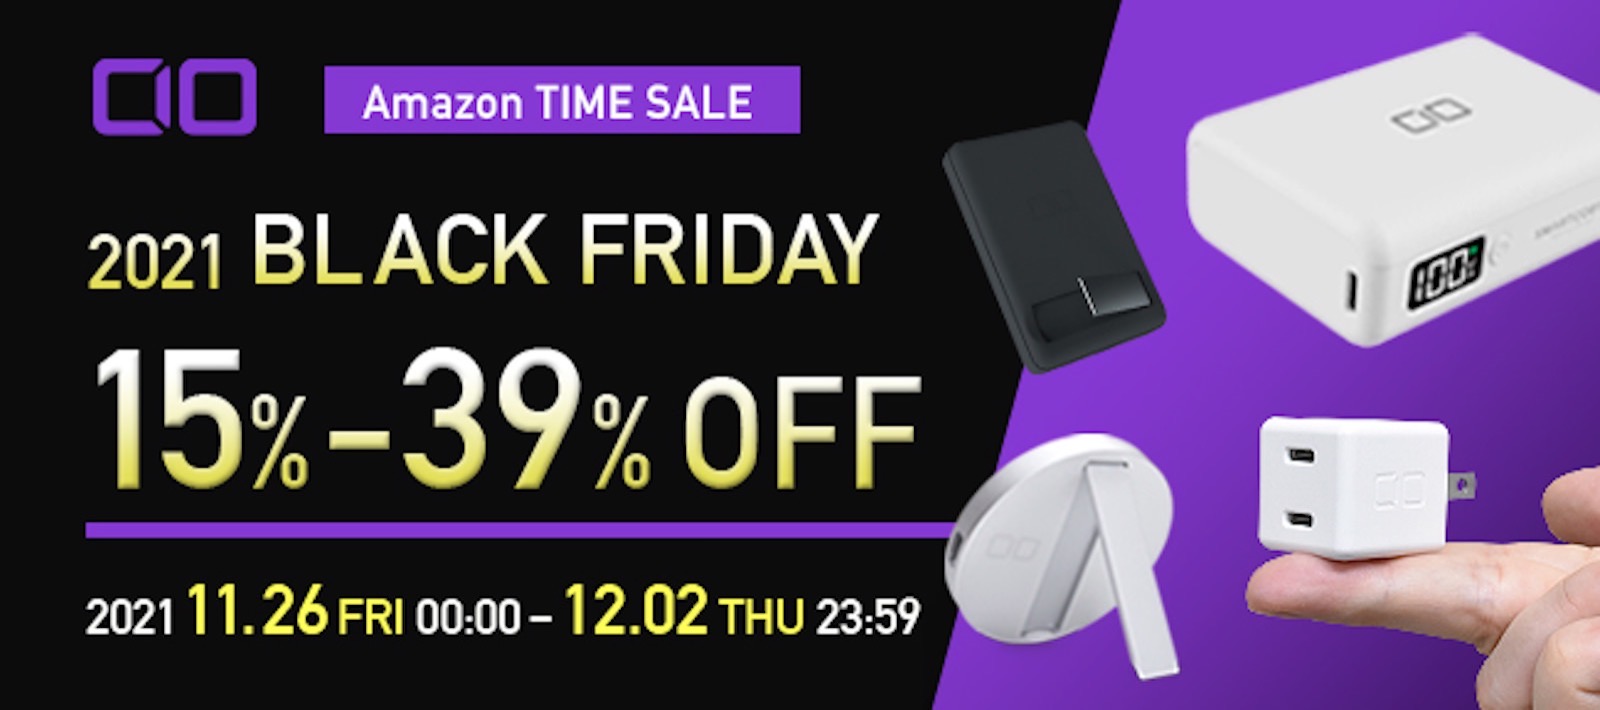 CIO-Amazon-Black-Friday-Sale.jpg